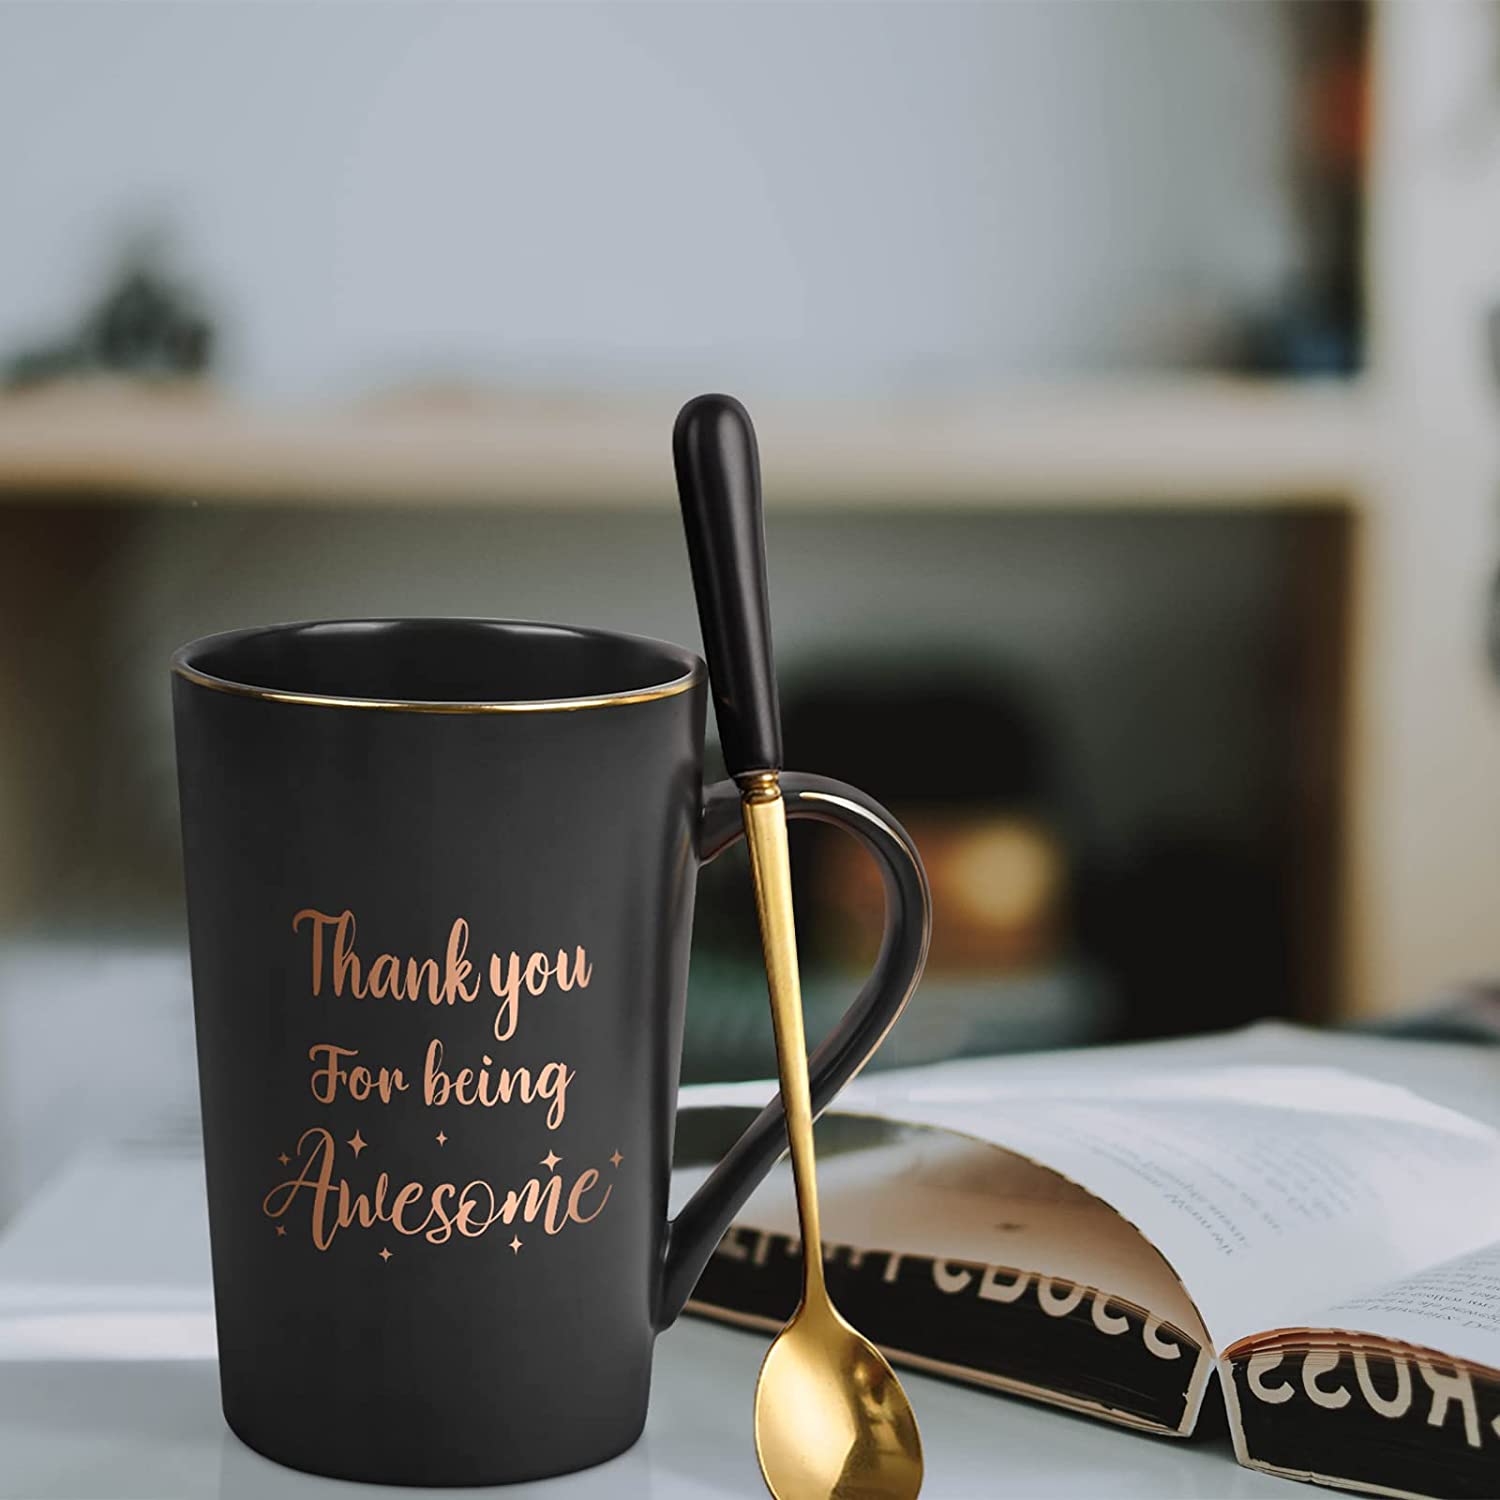 Futtumy Black 14 fl oz Coffee Mugs Ceramic Mug Tea Cup, Thank You for Being Awesome Mug, Inspirational Christmas Birthday Gifts for Men Women Friends, Thank You Gifts for Mug - image 5 of 10